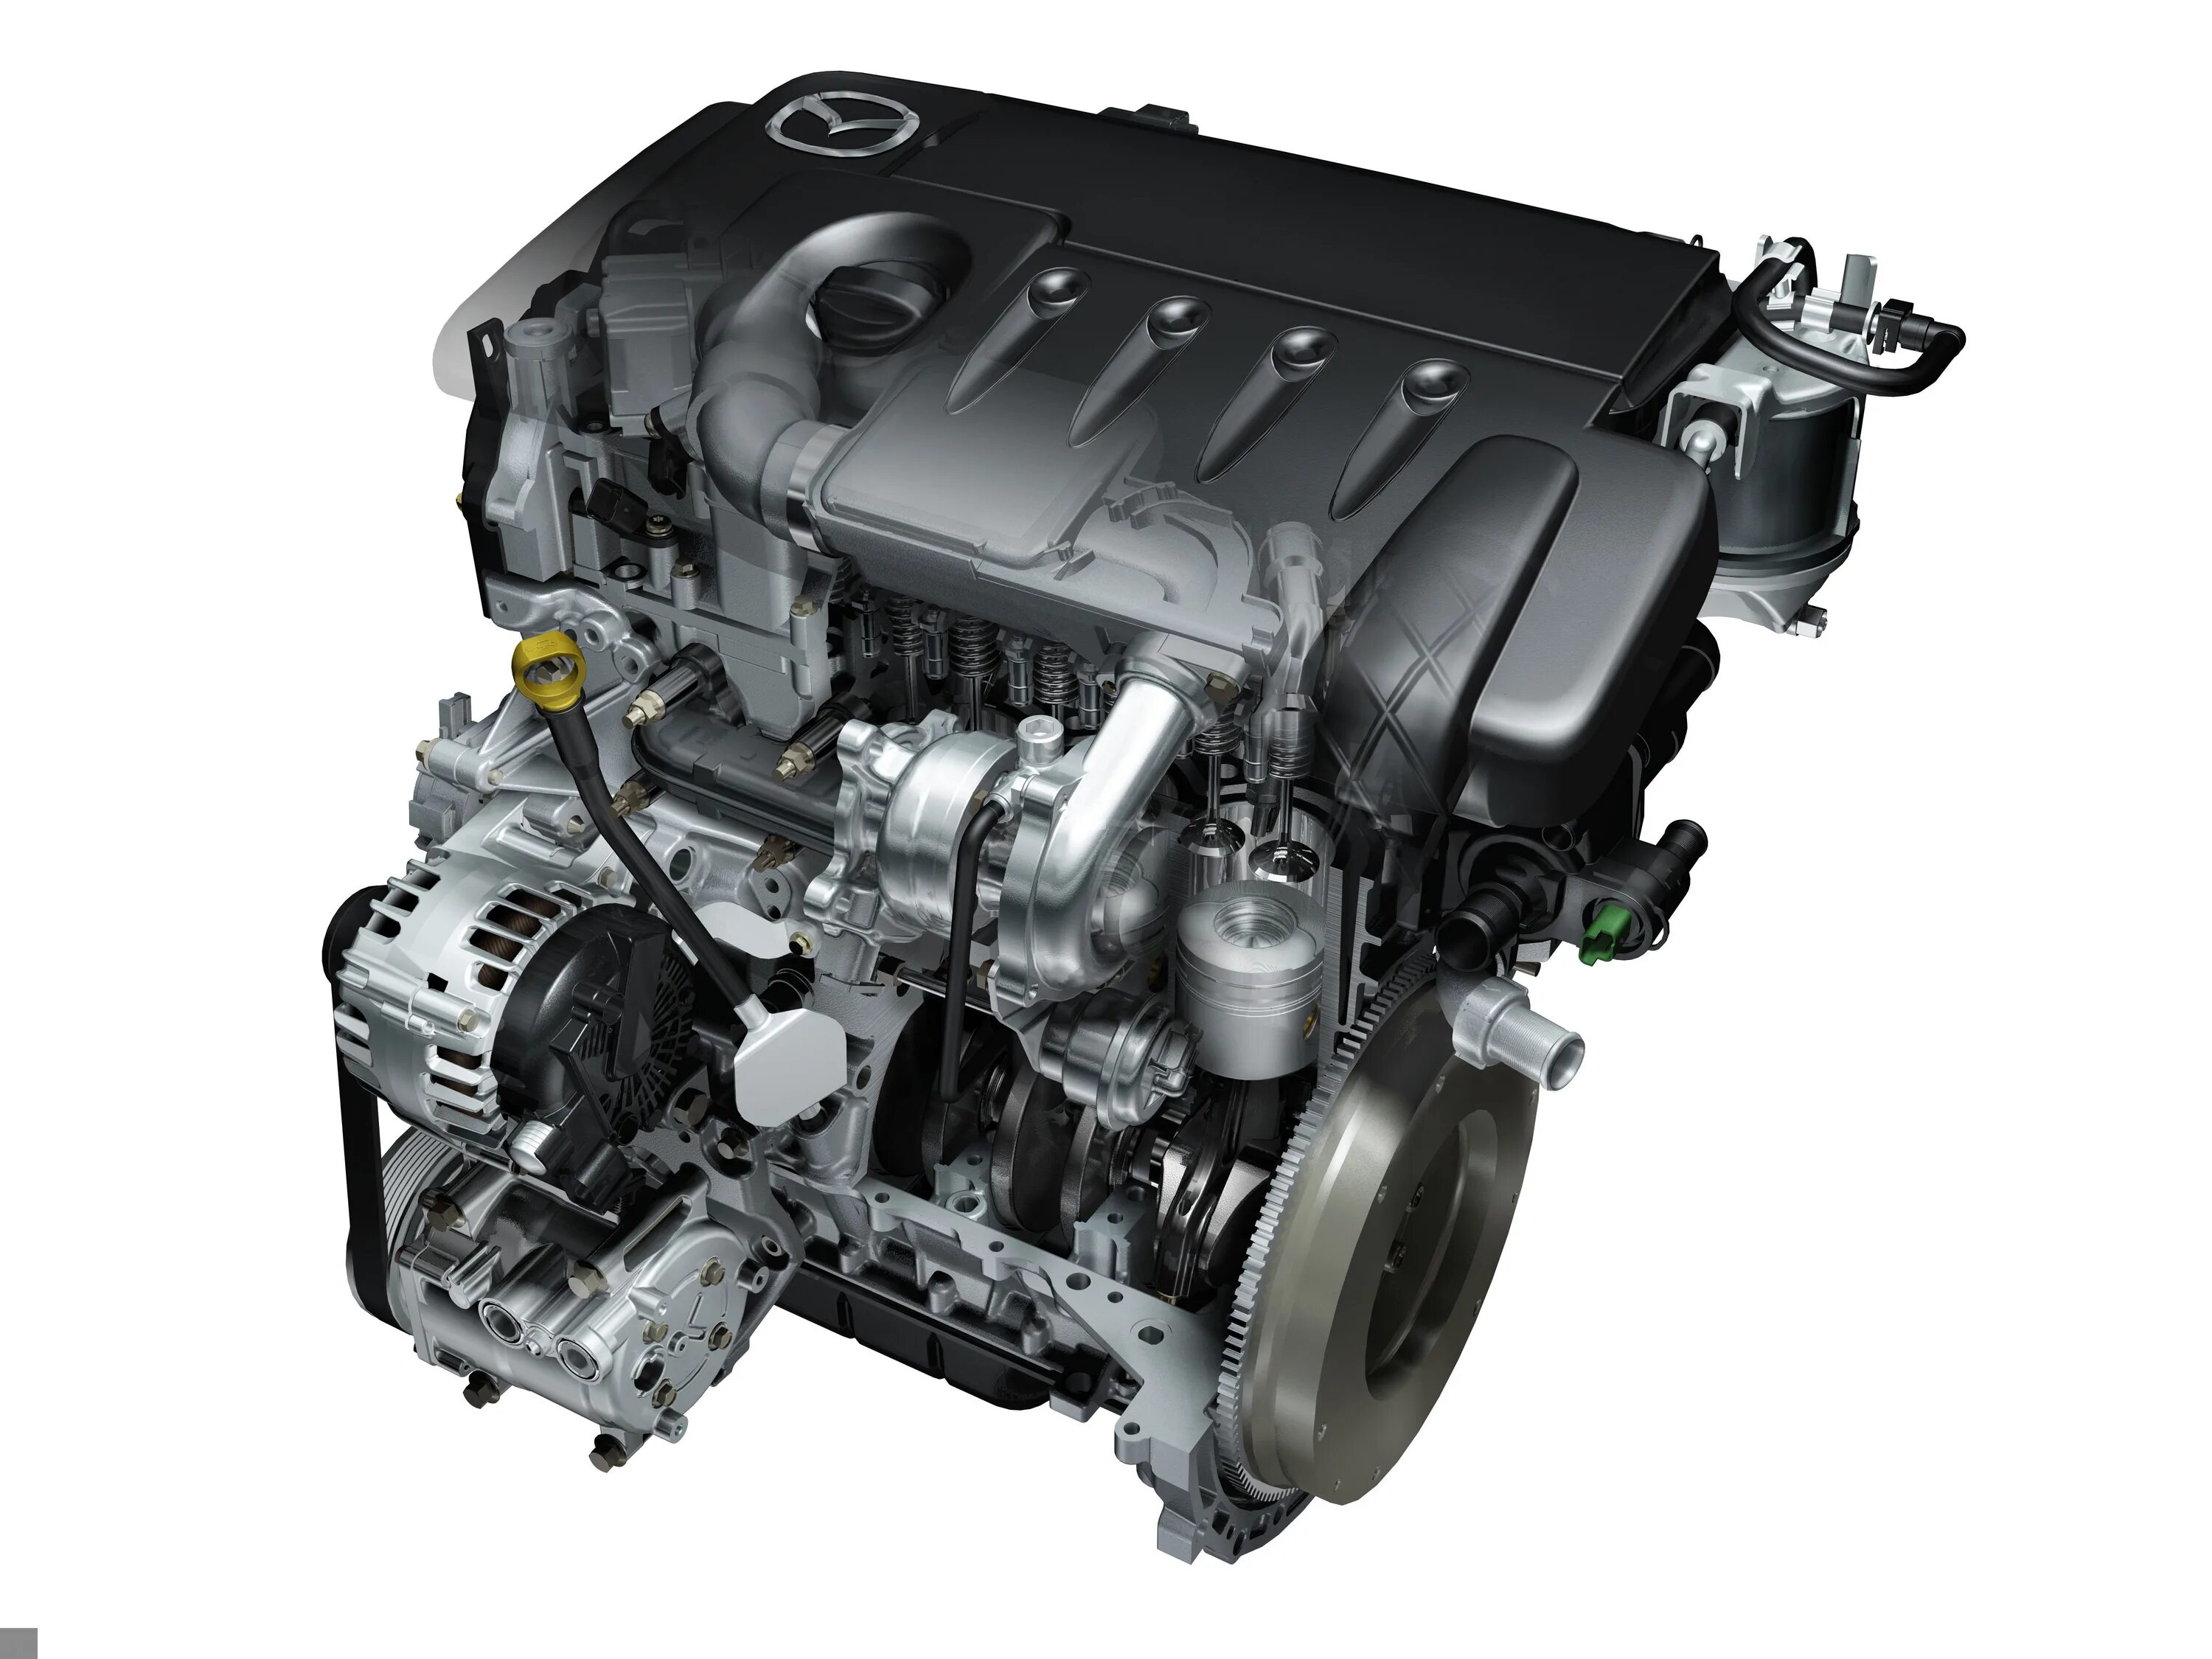 Мазда 3 1 6 двигатель. Мотор Мазда 1.6. ДВС Мазда 3l. Мотор Мазда 3 1.6. Mazda 6 2.3 двигатель.